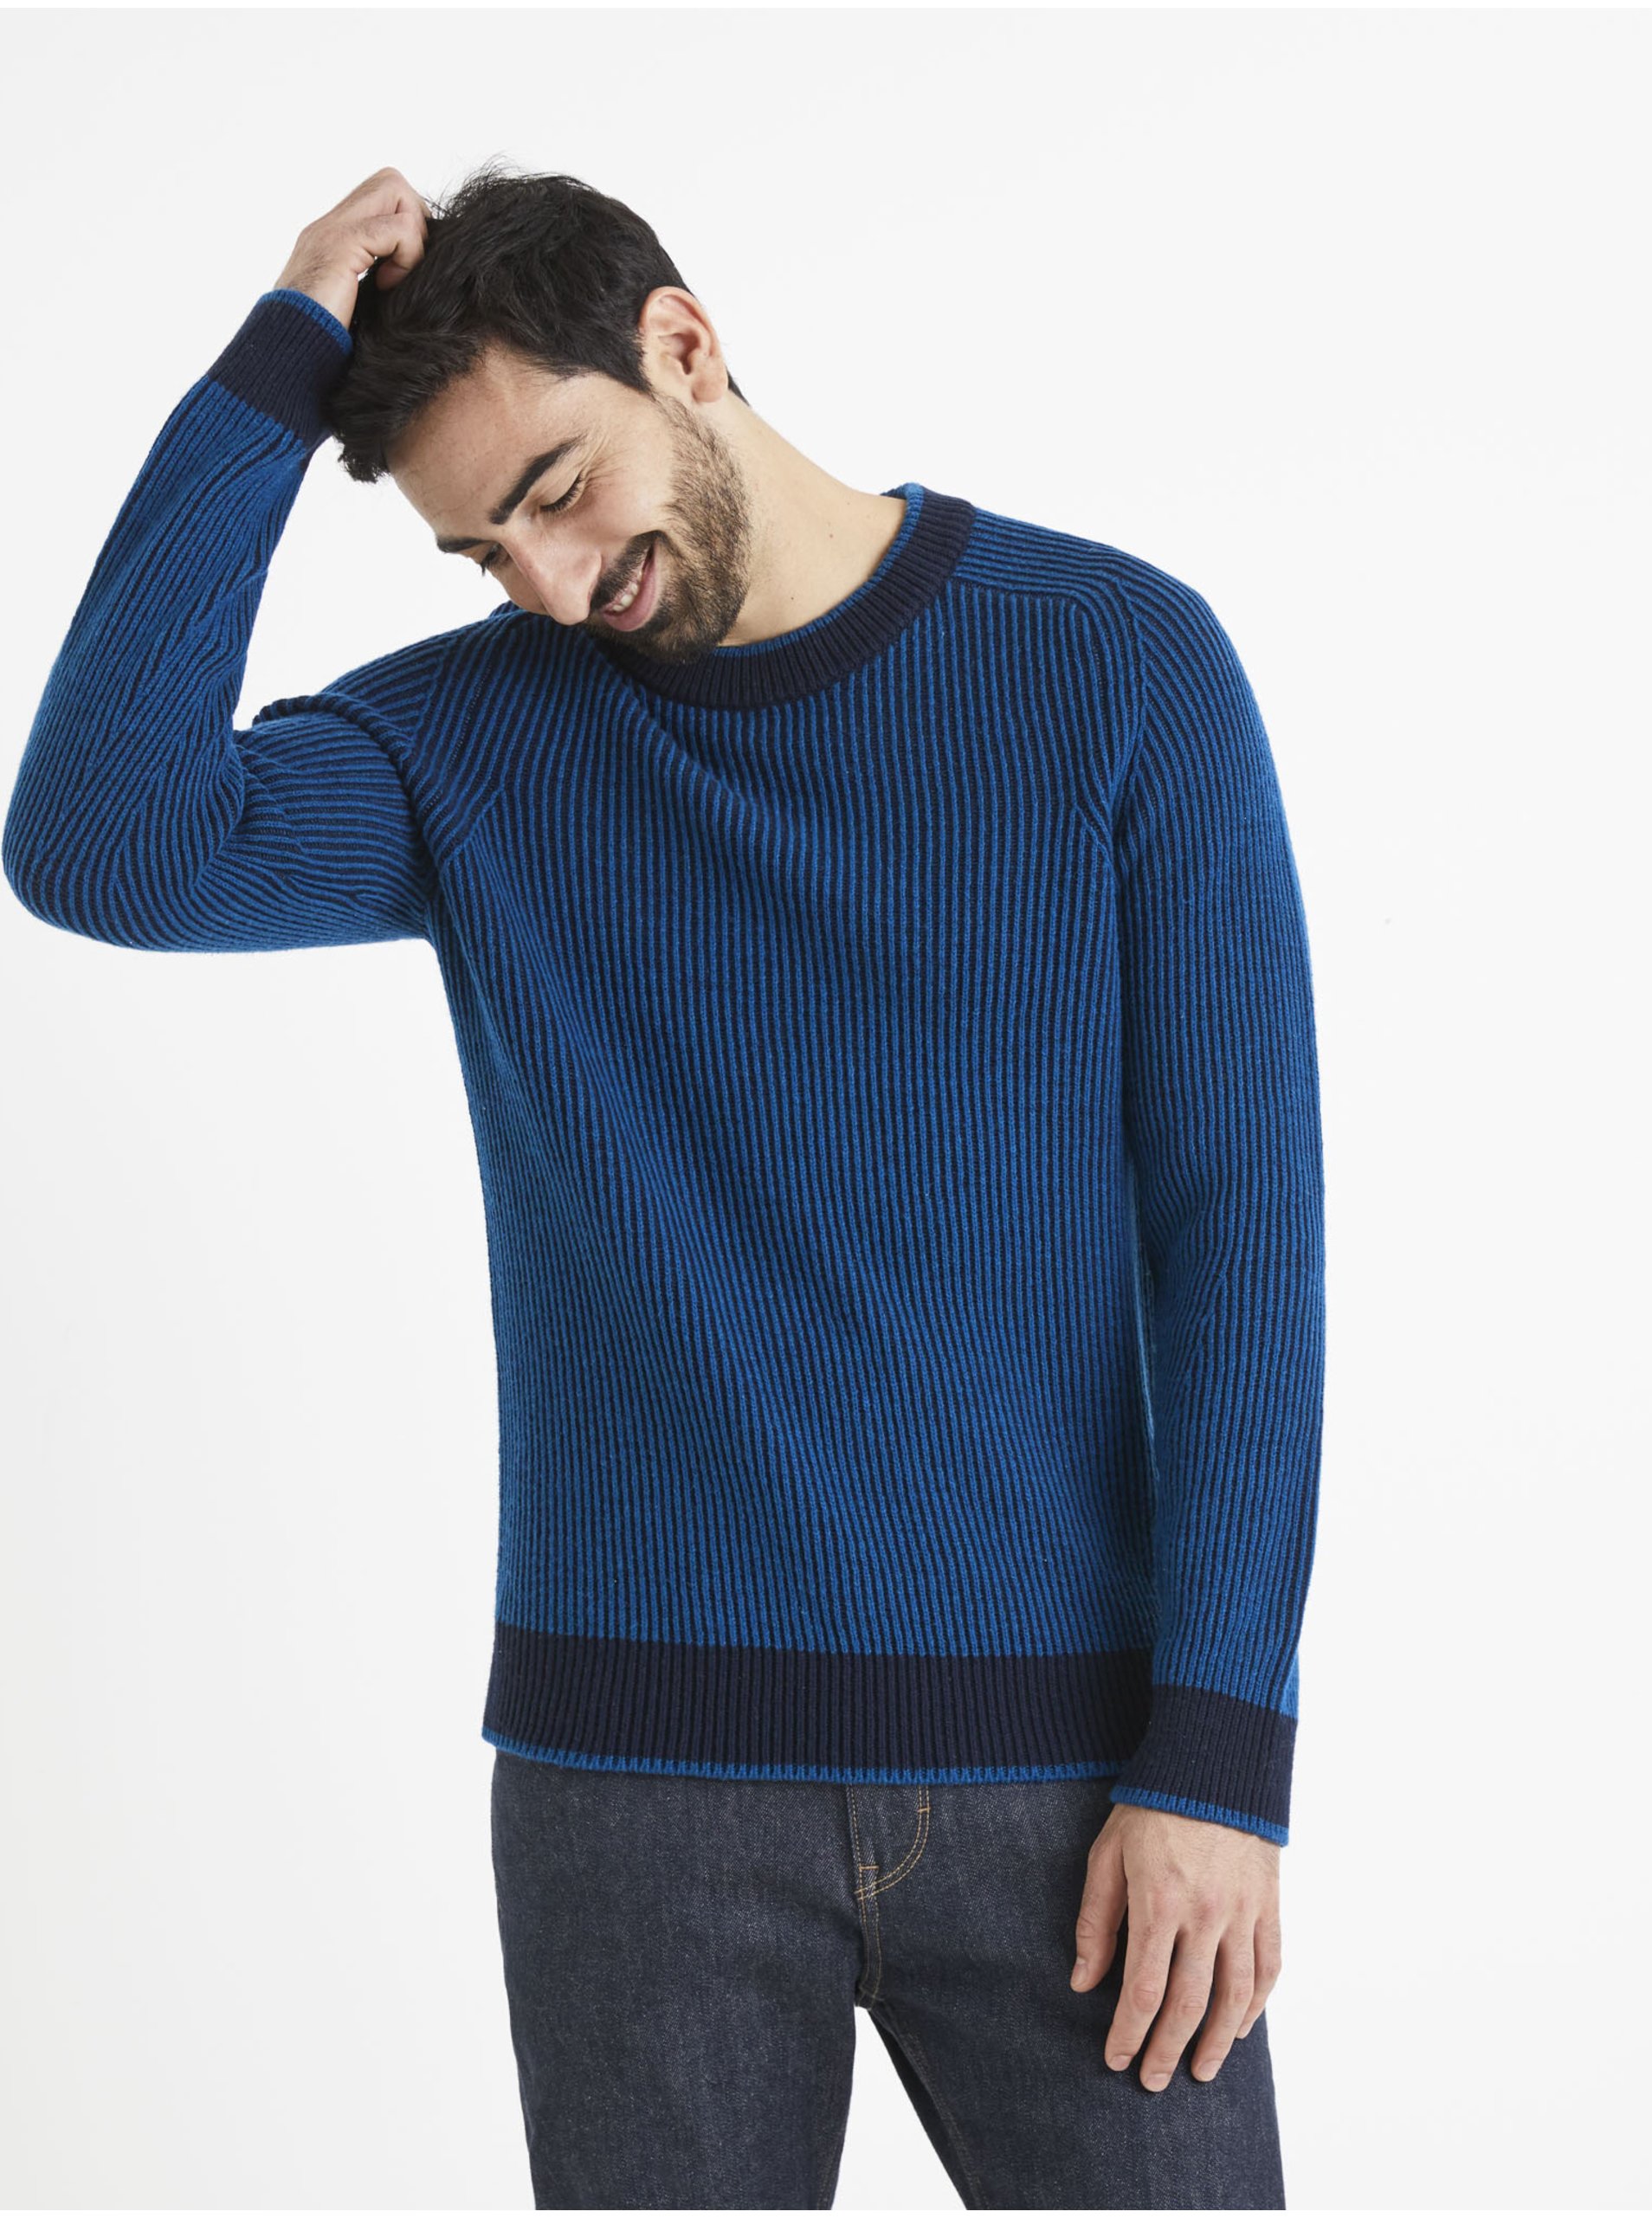 E-shop Černo-modrý pánský svetr s příměsí vlny Celio